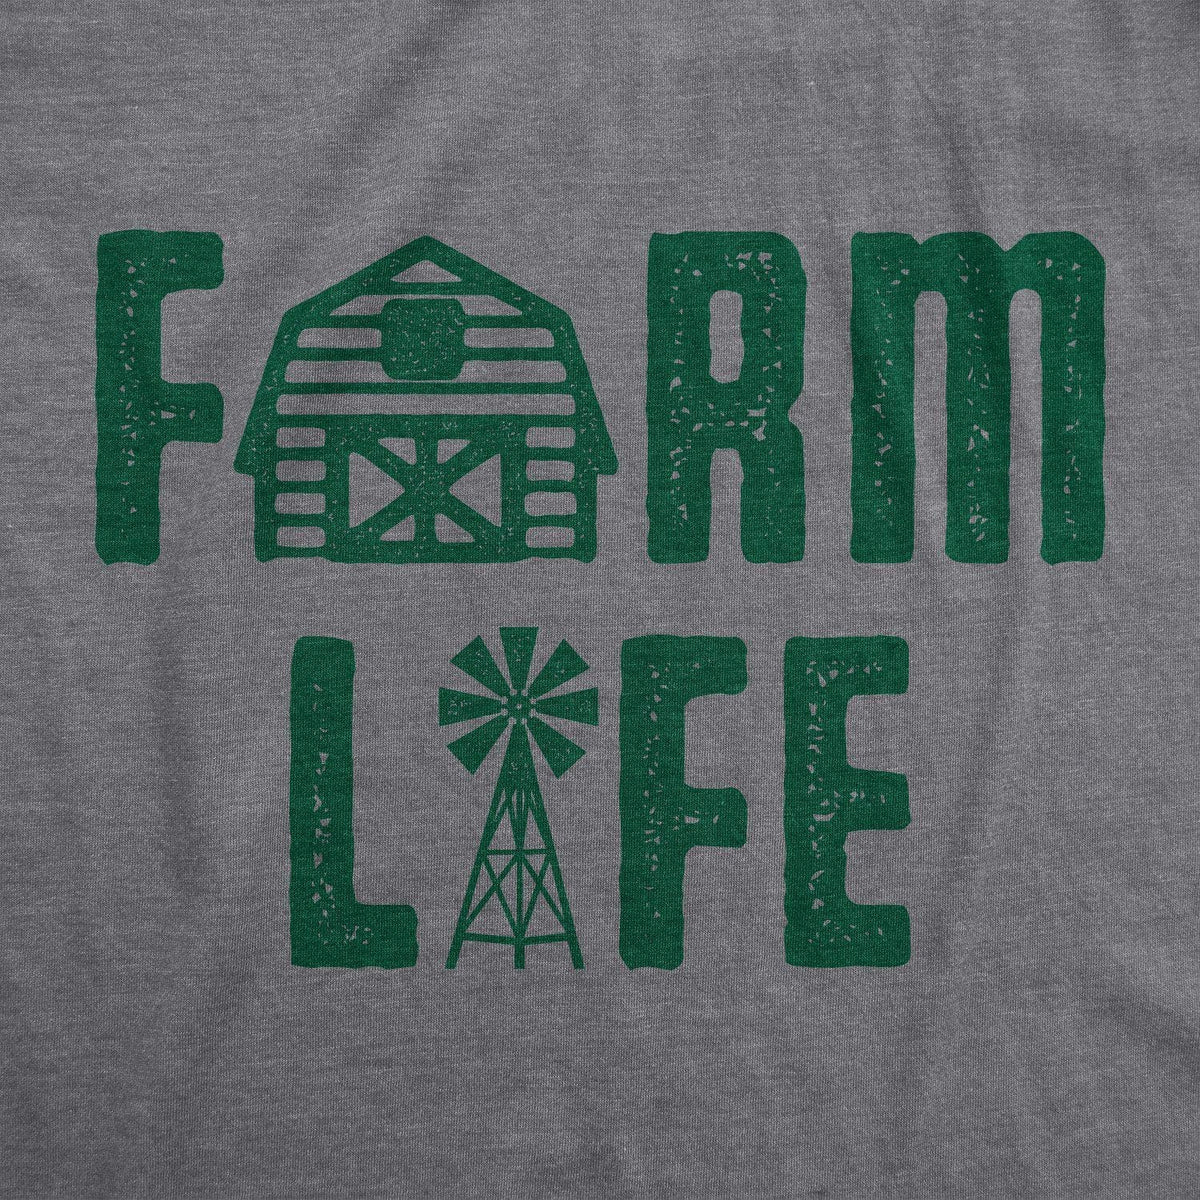 Farm Life Men&#39;s Tshirt - Crazy Dog T-Shirts